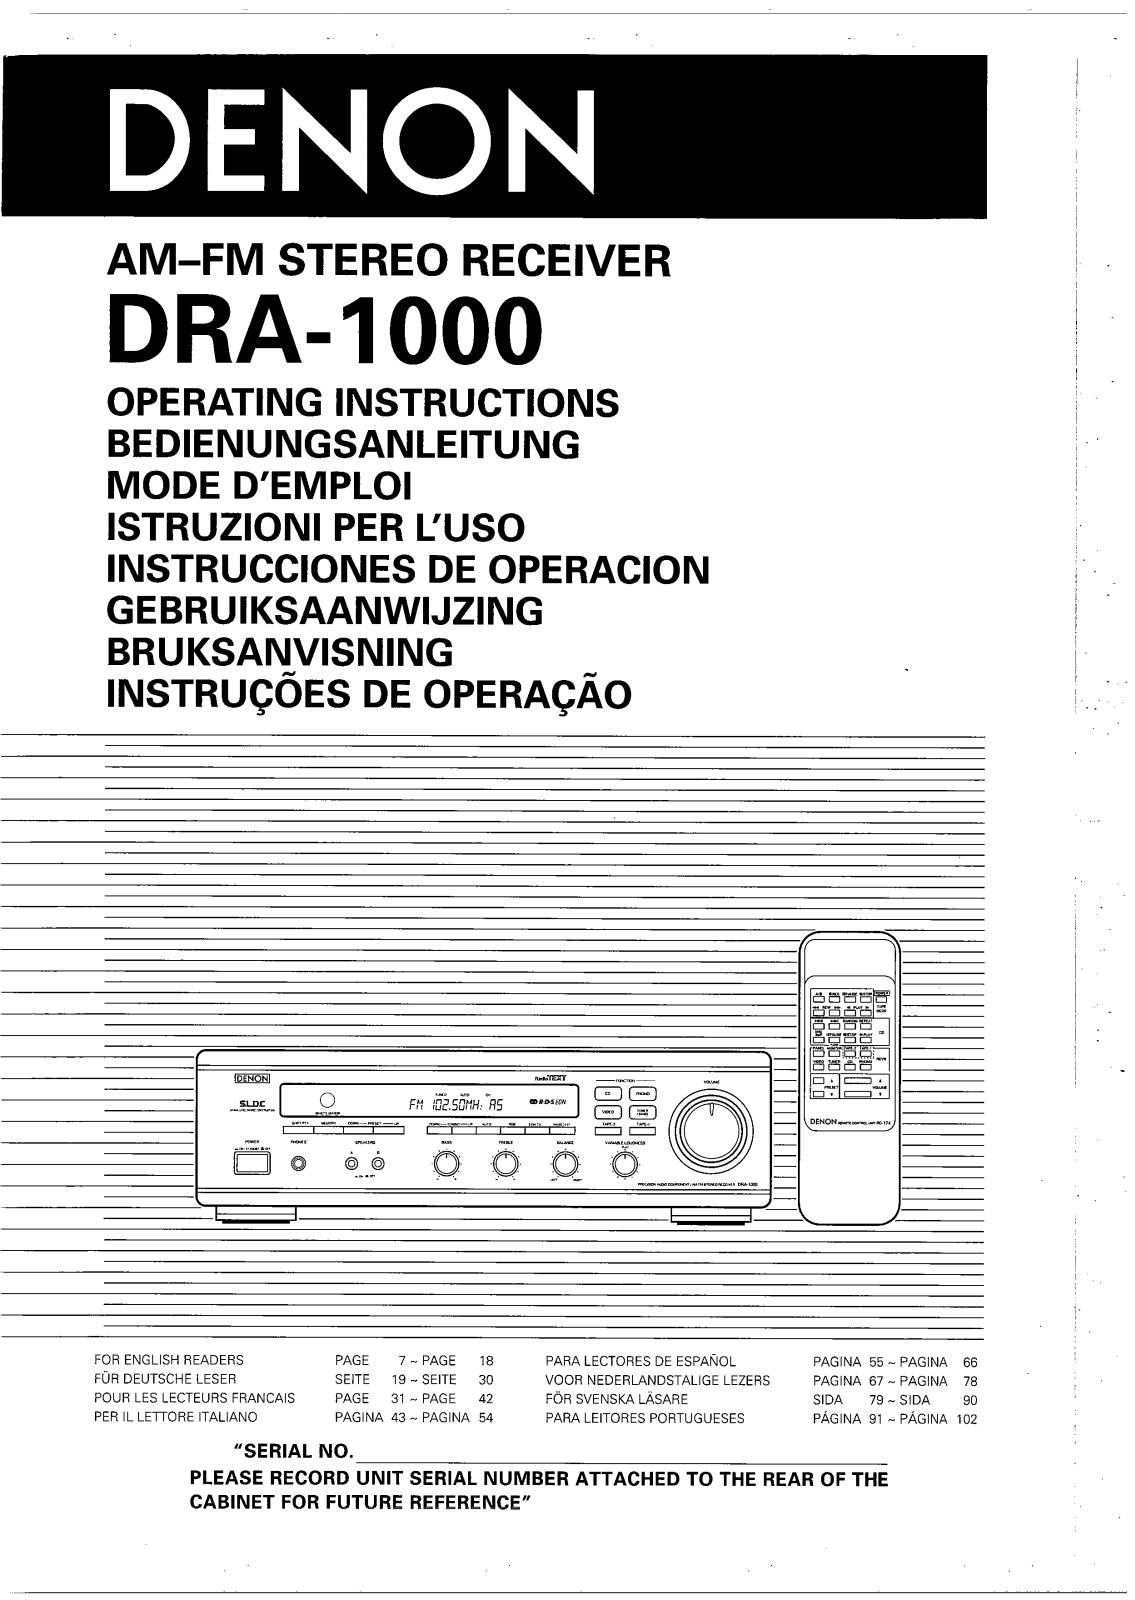 Denon DRA-1000